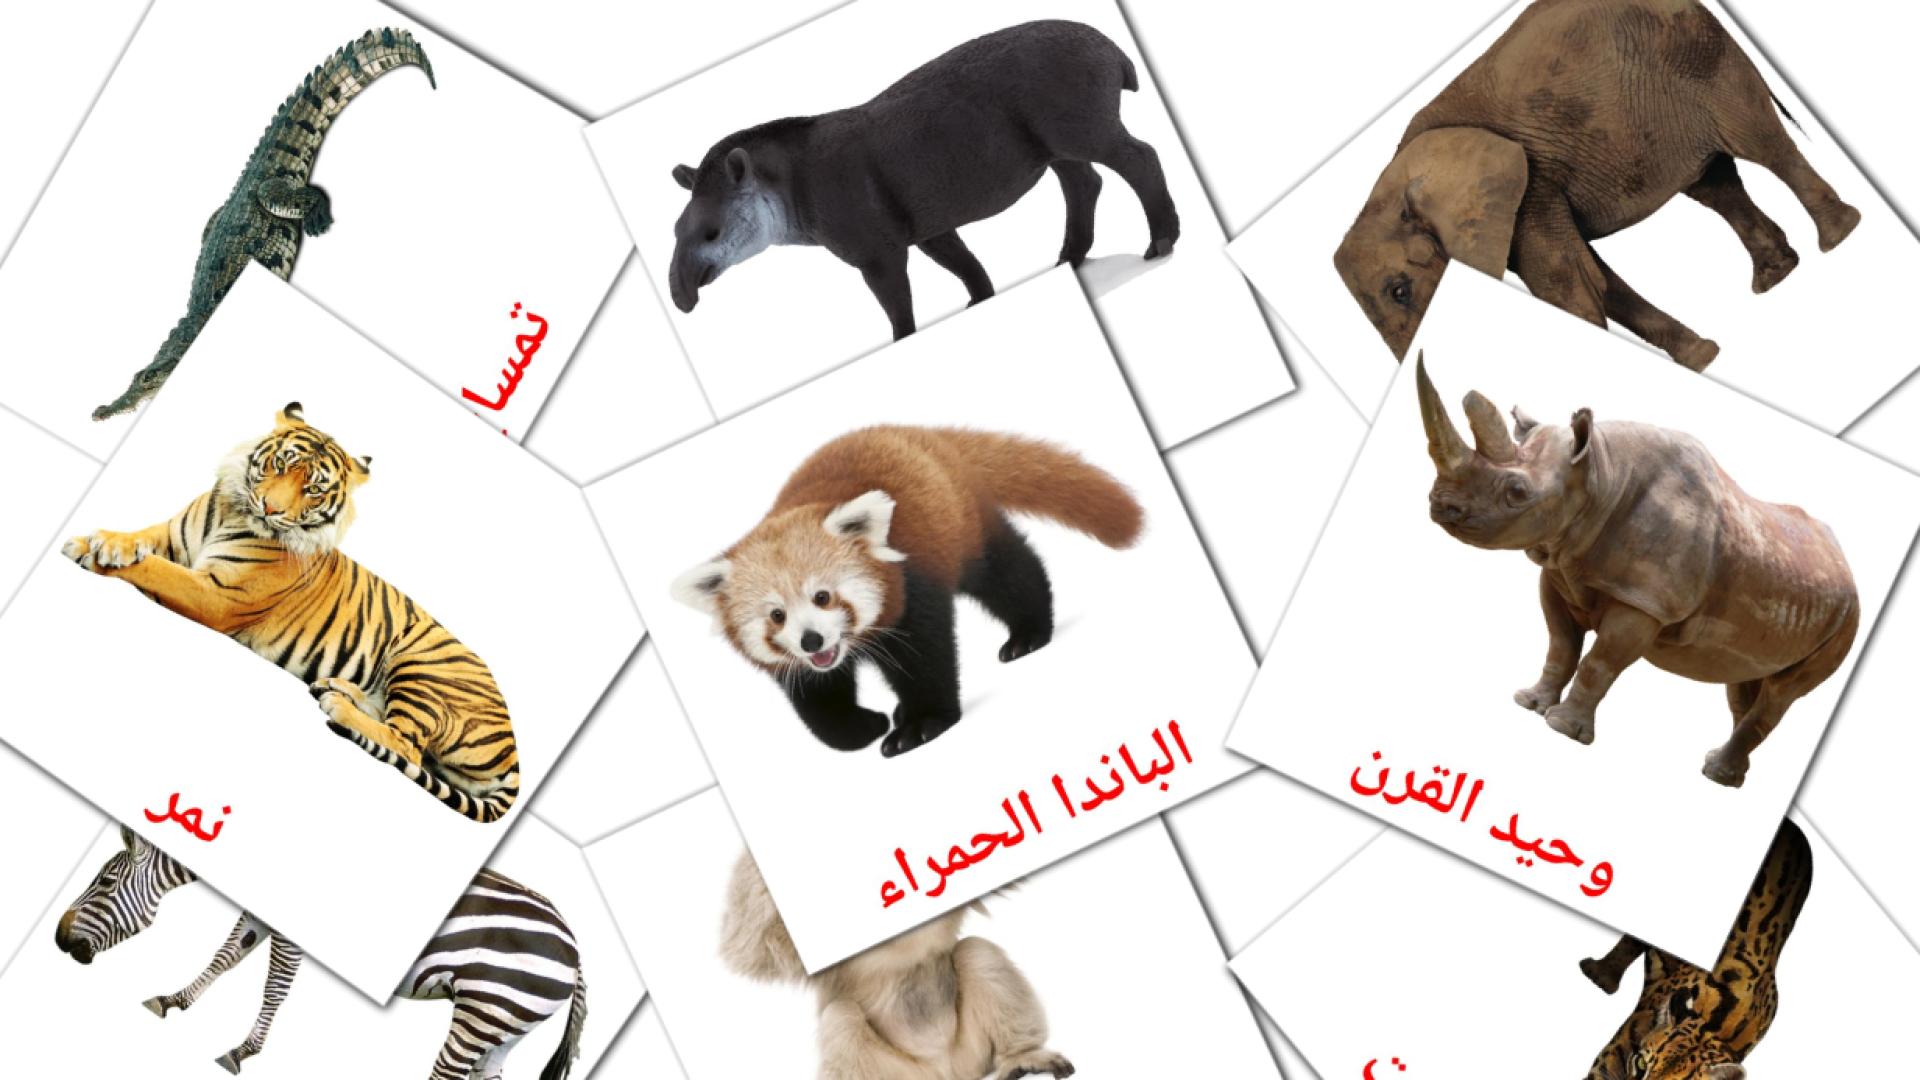 Dschungel Tiere - Arabisch Vokabelkarten